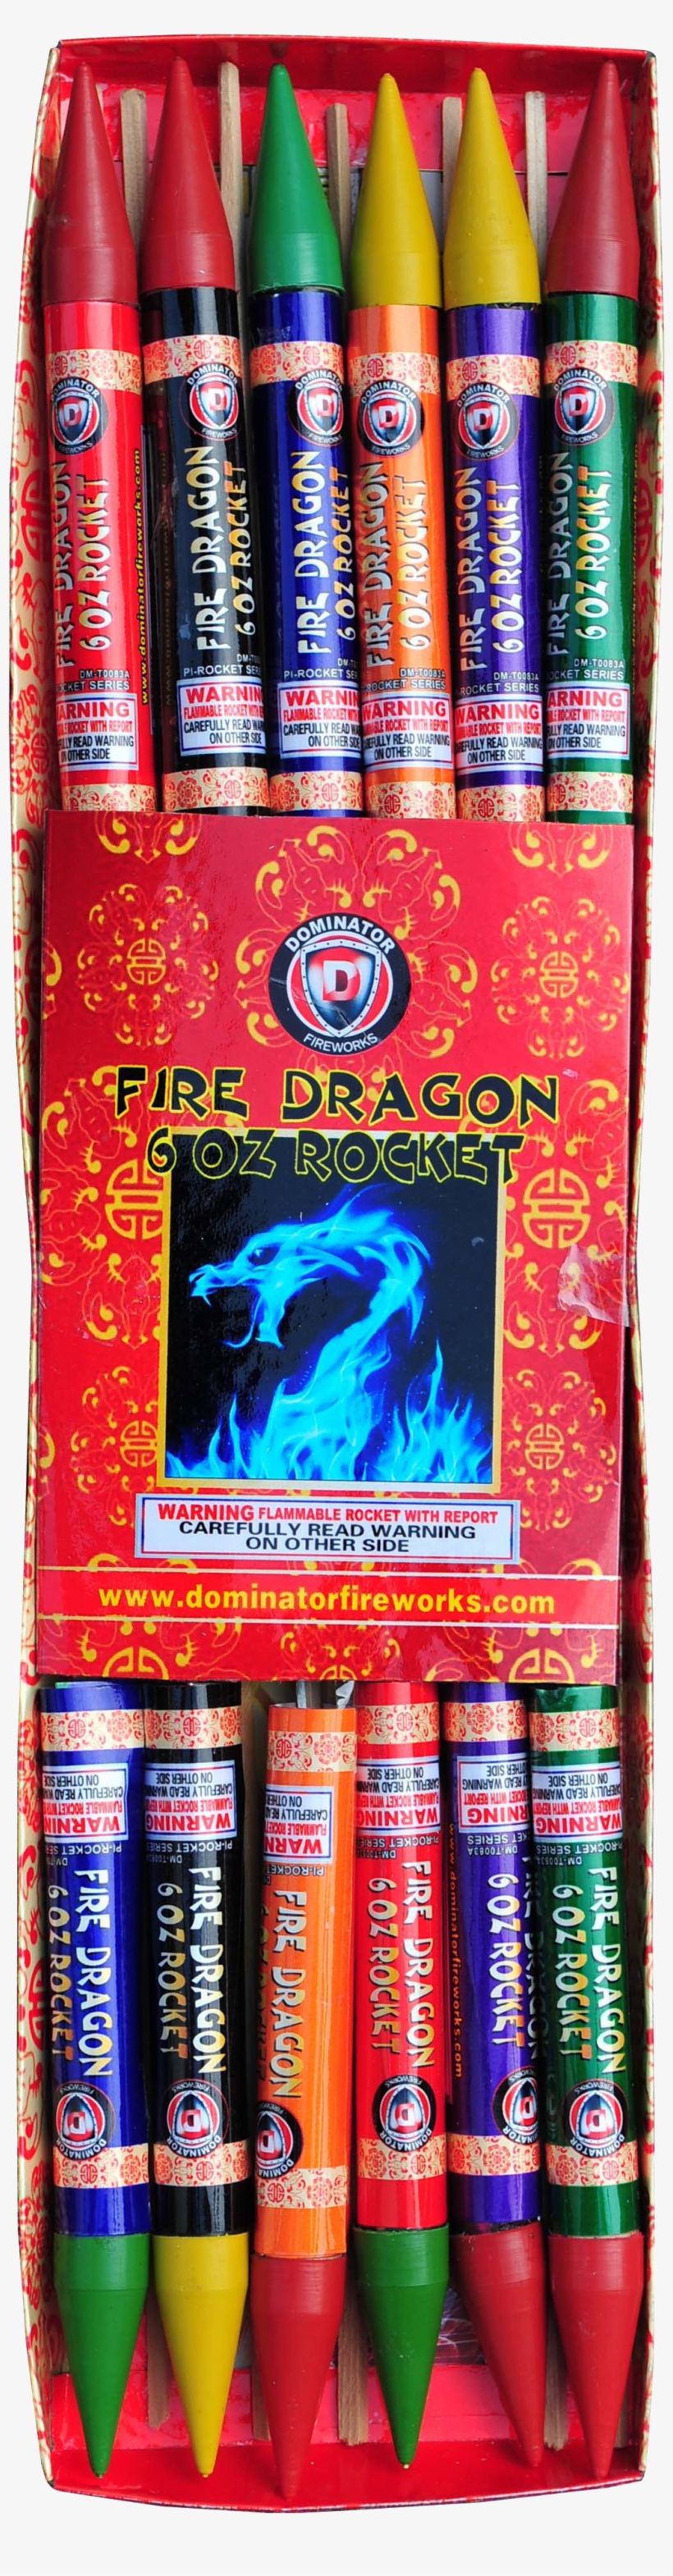 Fire Dragon 6 Oz Rocket 12 Pack - Fire, transparent png #1093463